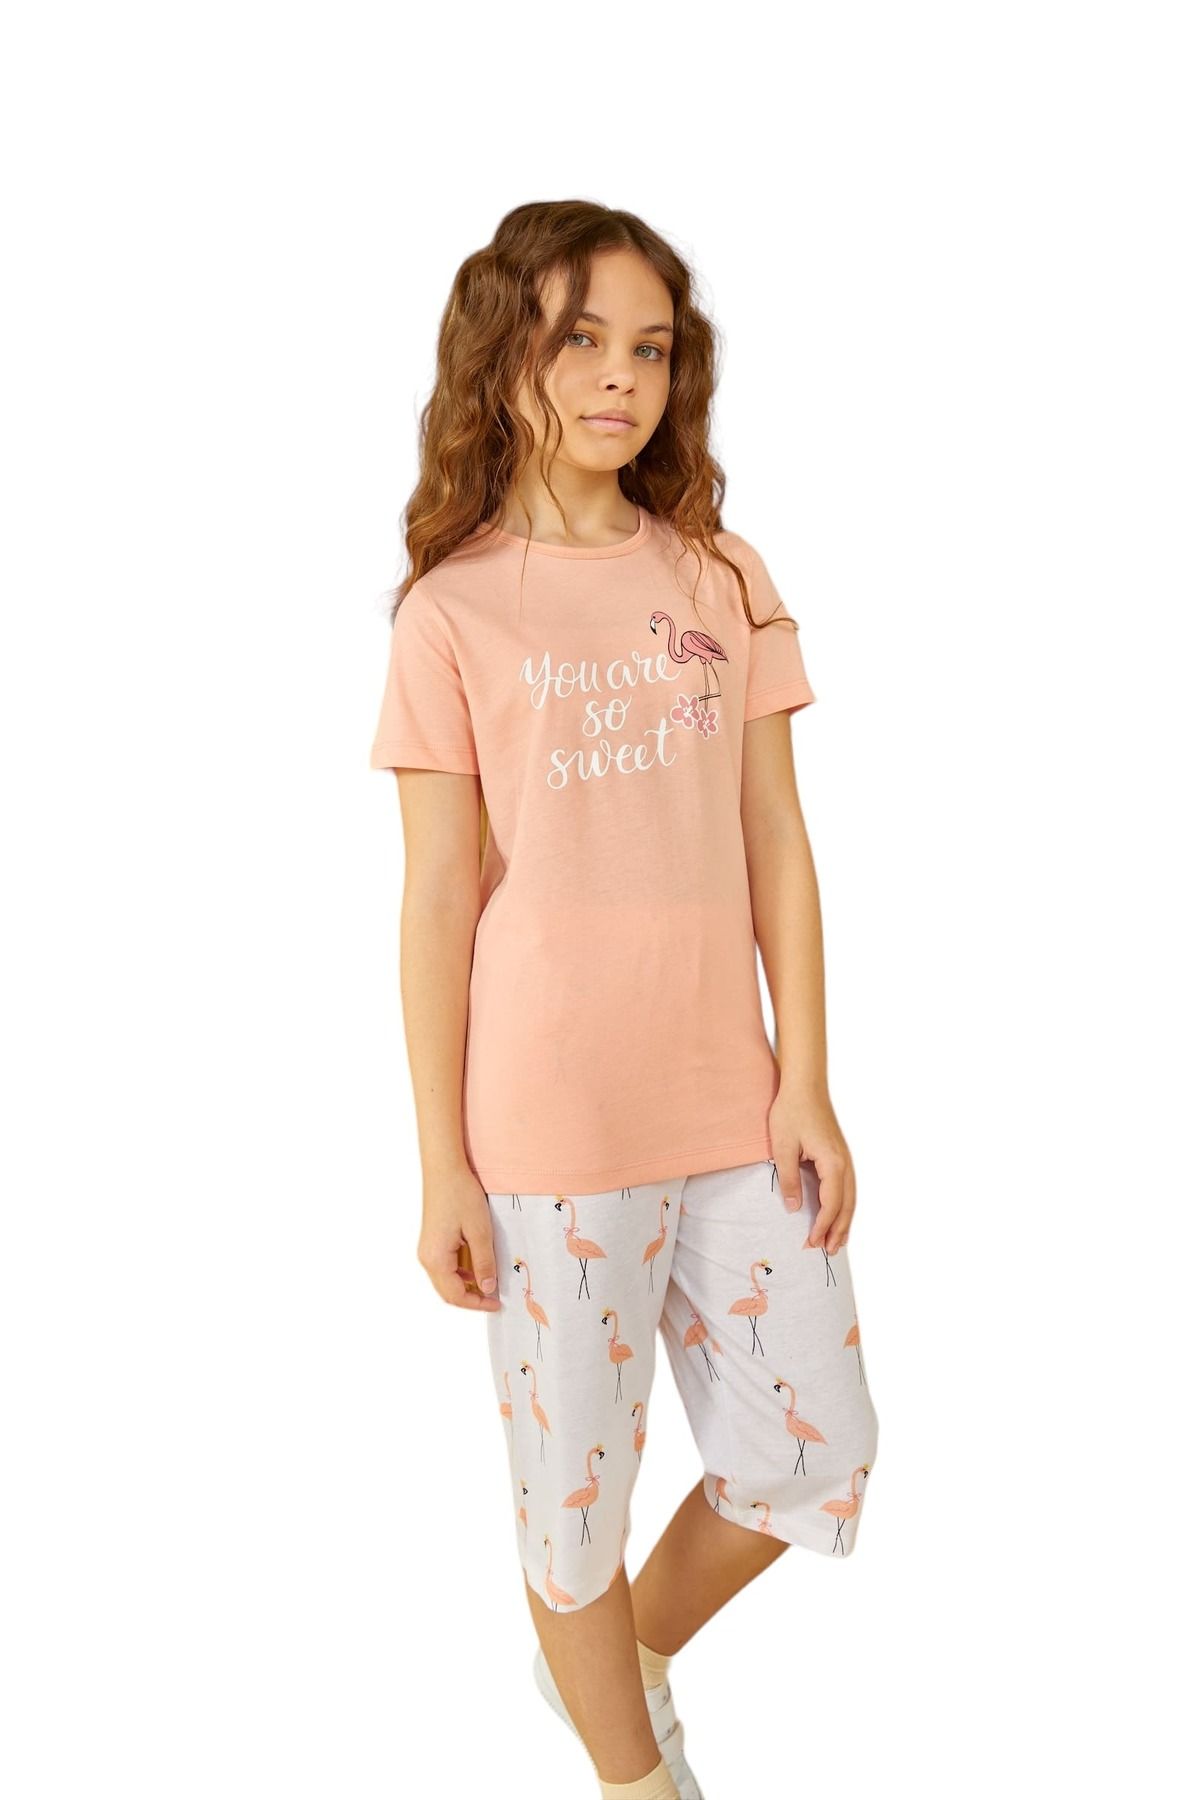 Weweus Turuncu Kız Çocuk Pijama Takımı 801